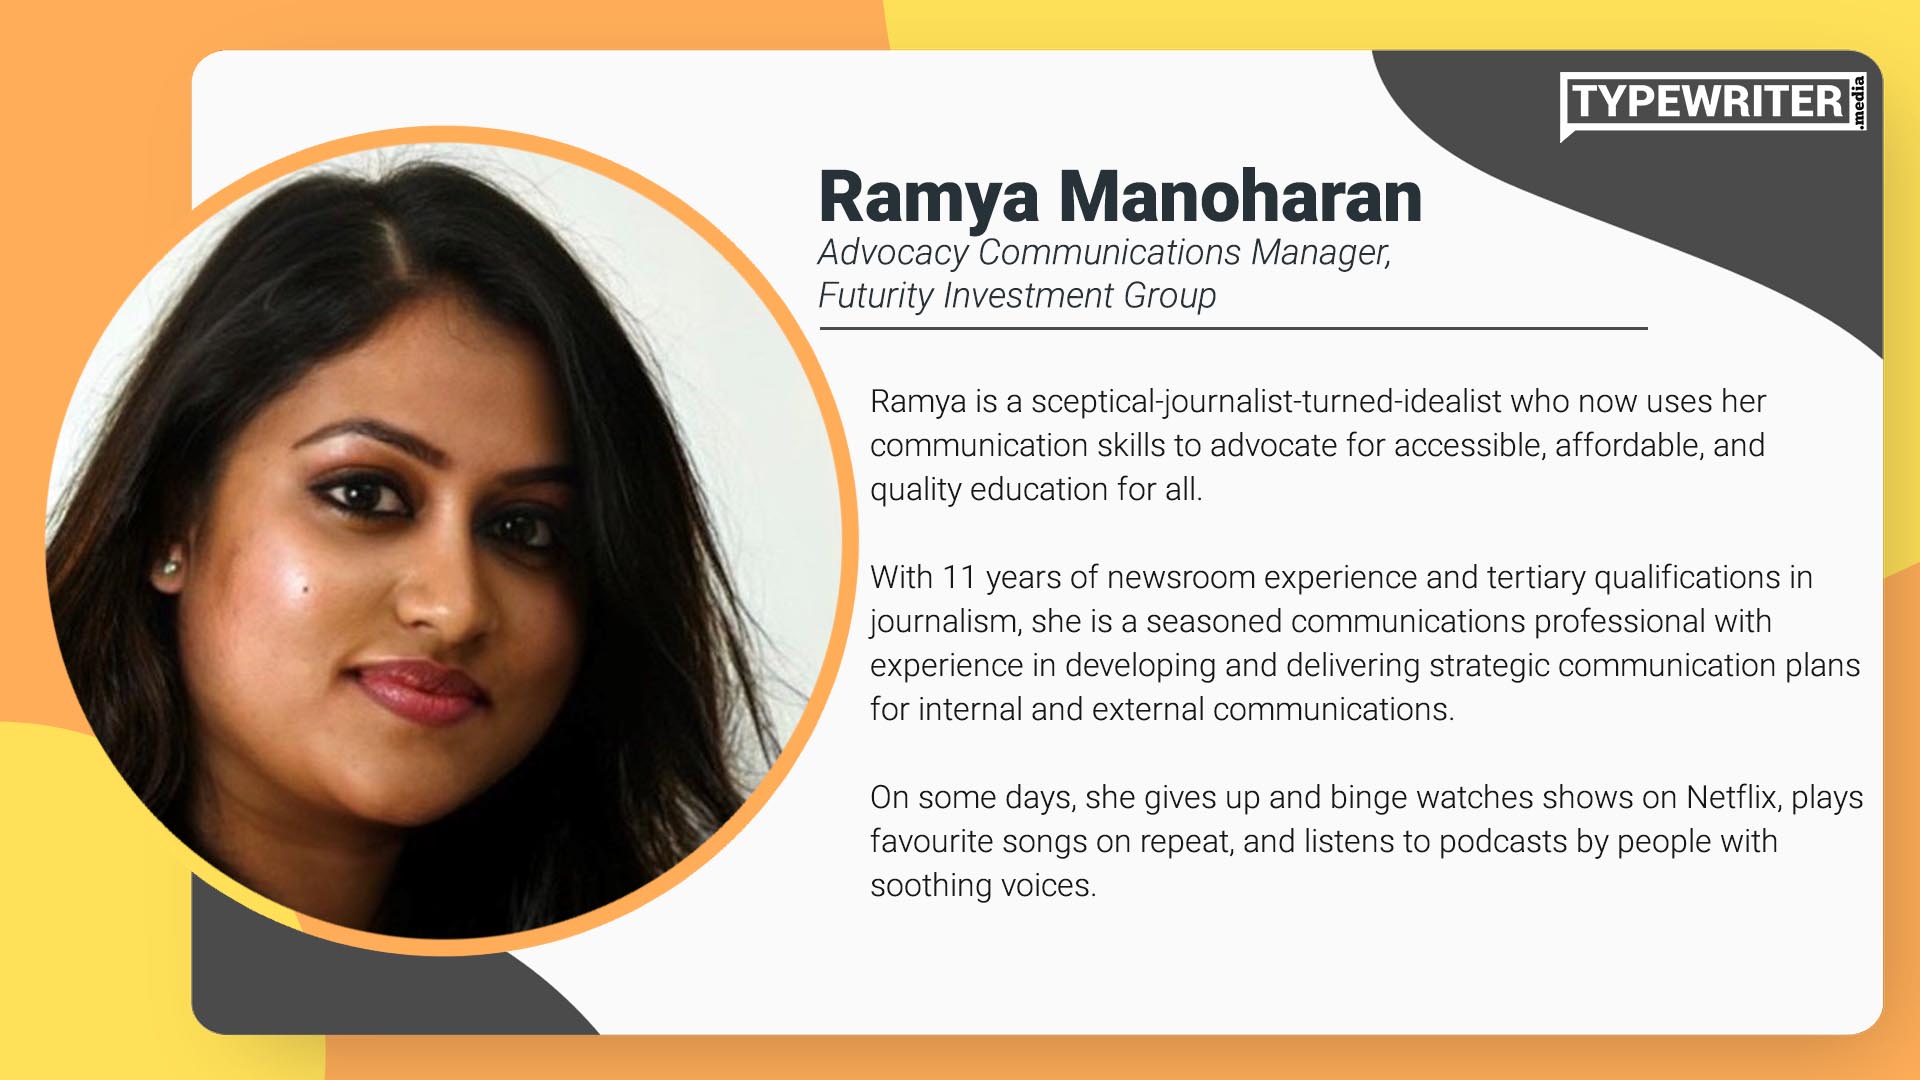 women leader in public relations/communications - ramya manoharan